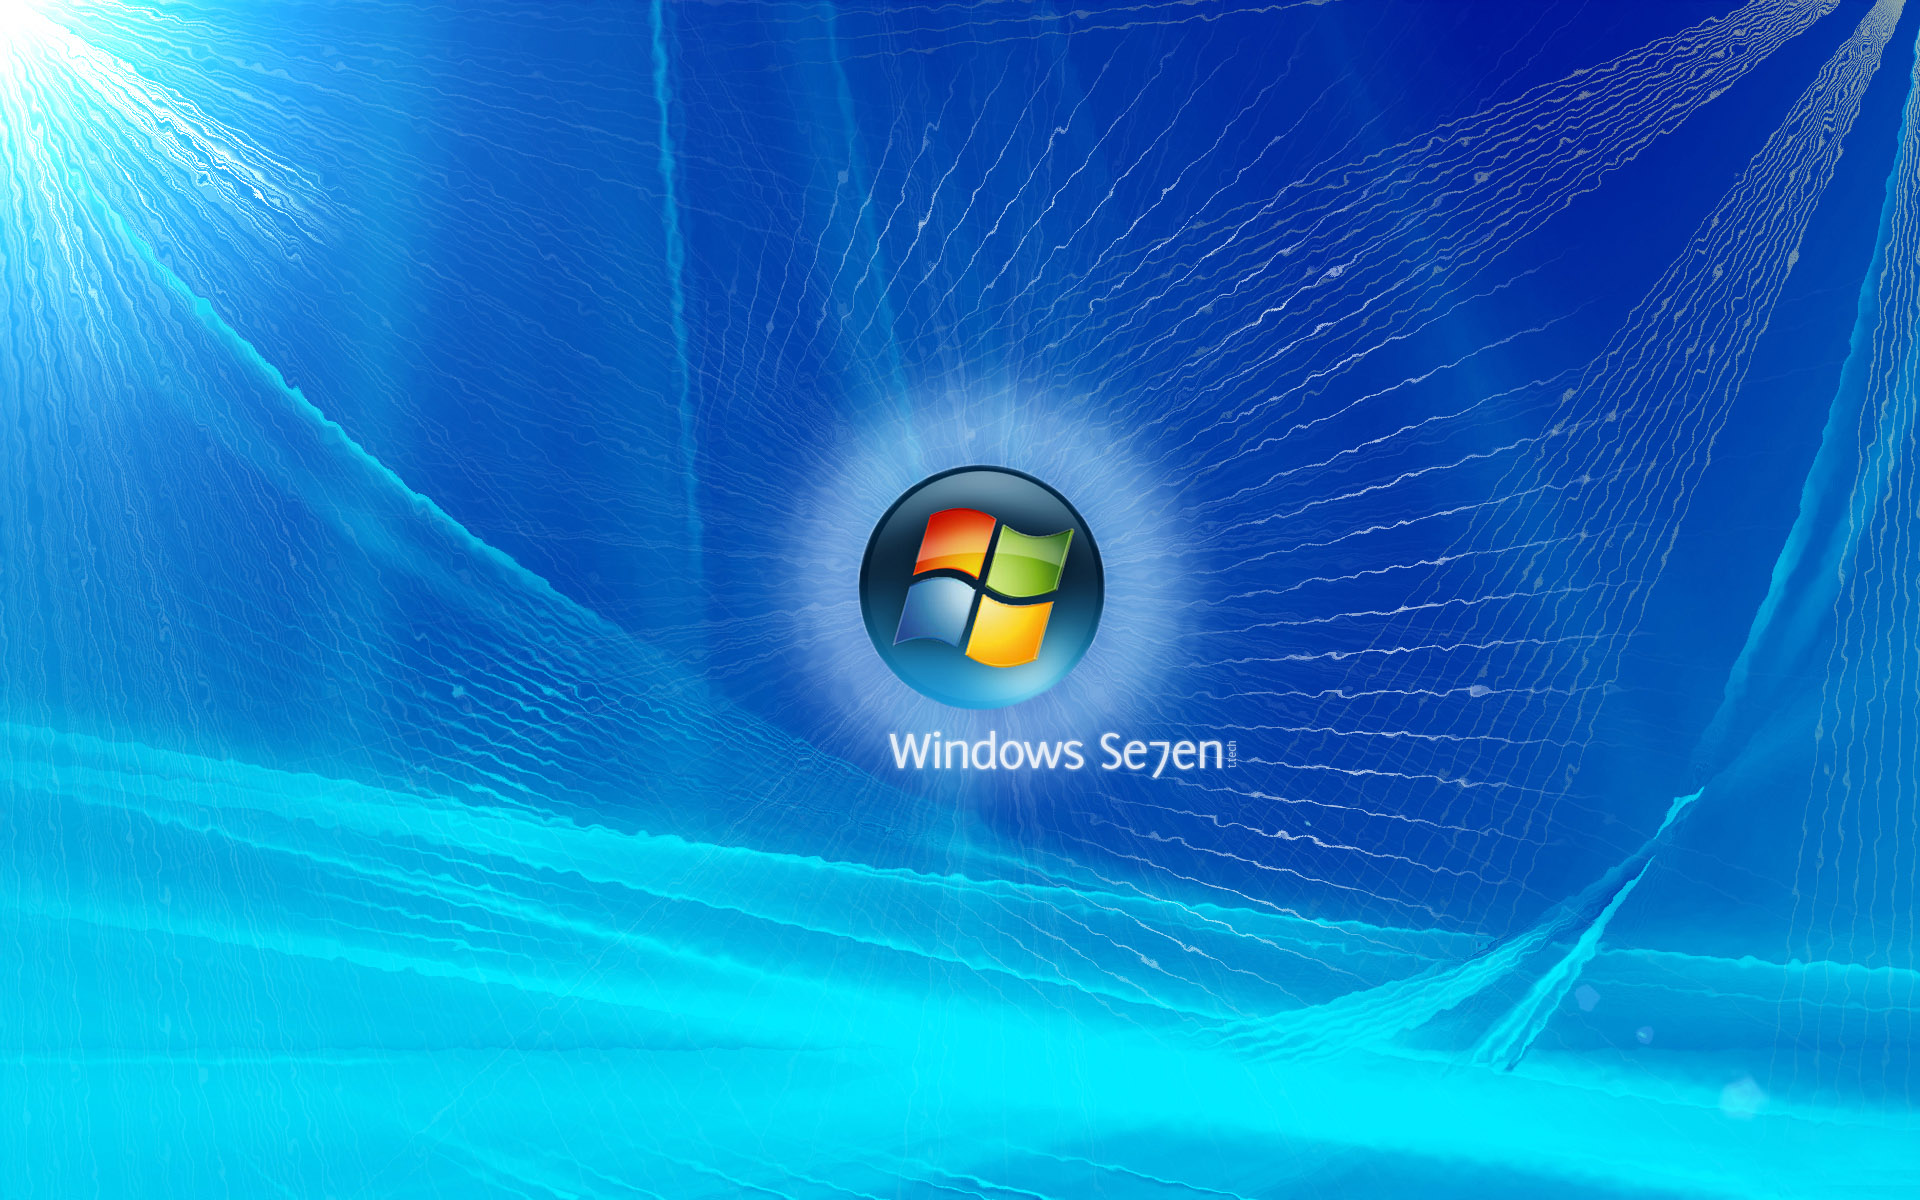 HD Windows Seven Abstract Wallpaper No Desktop